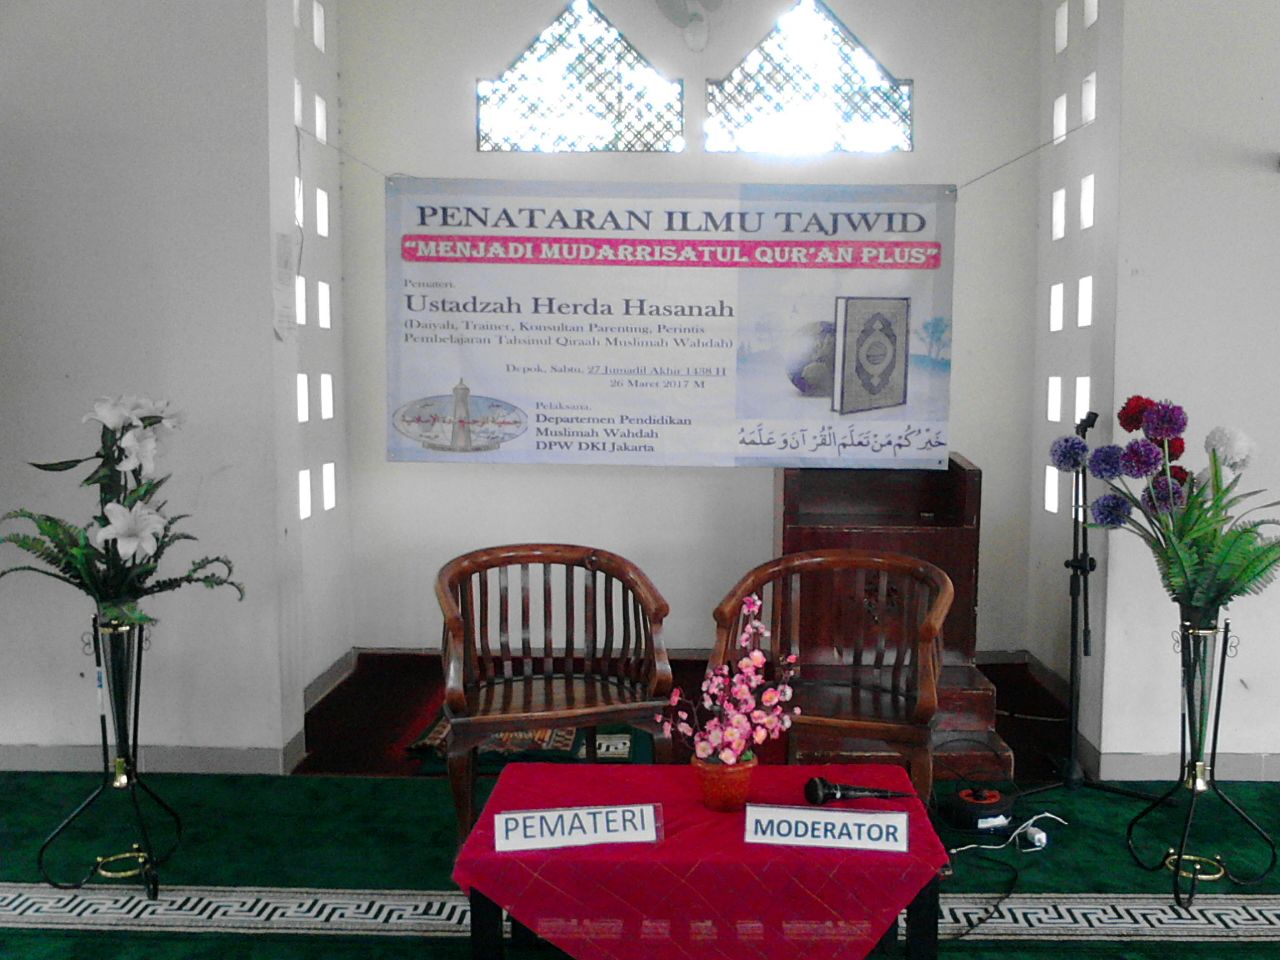 Penataran Ilmu Tajwid Plus (PIT Plus) Muslimah Wahdah Jakarta, Depok & Bogor